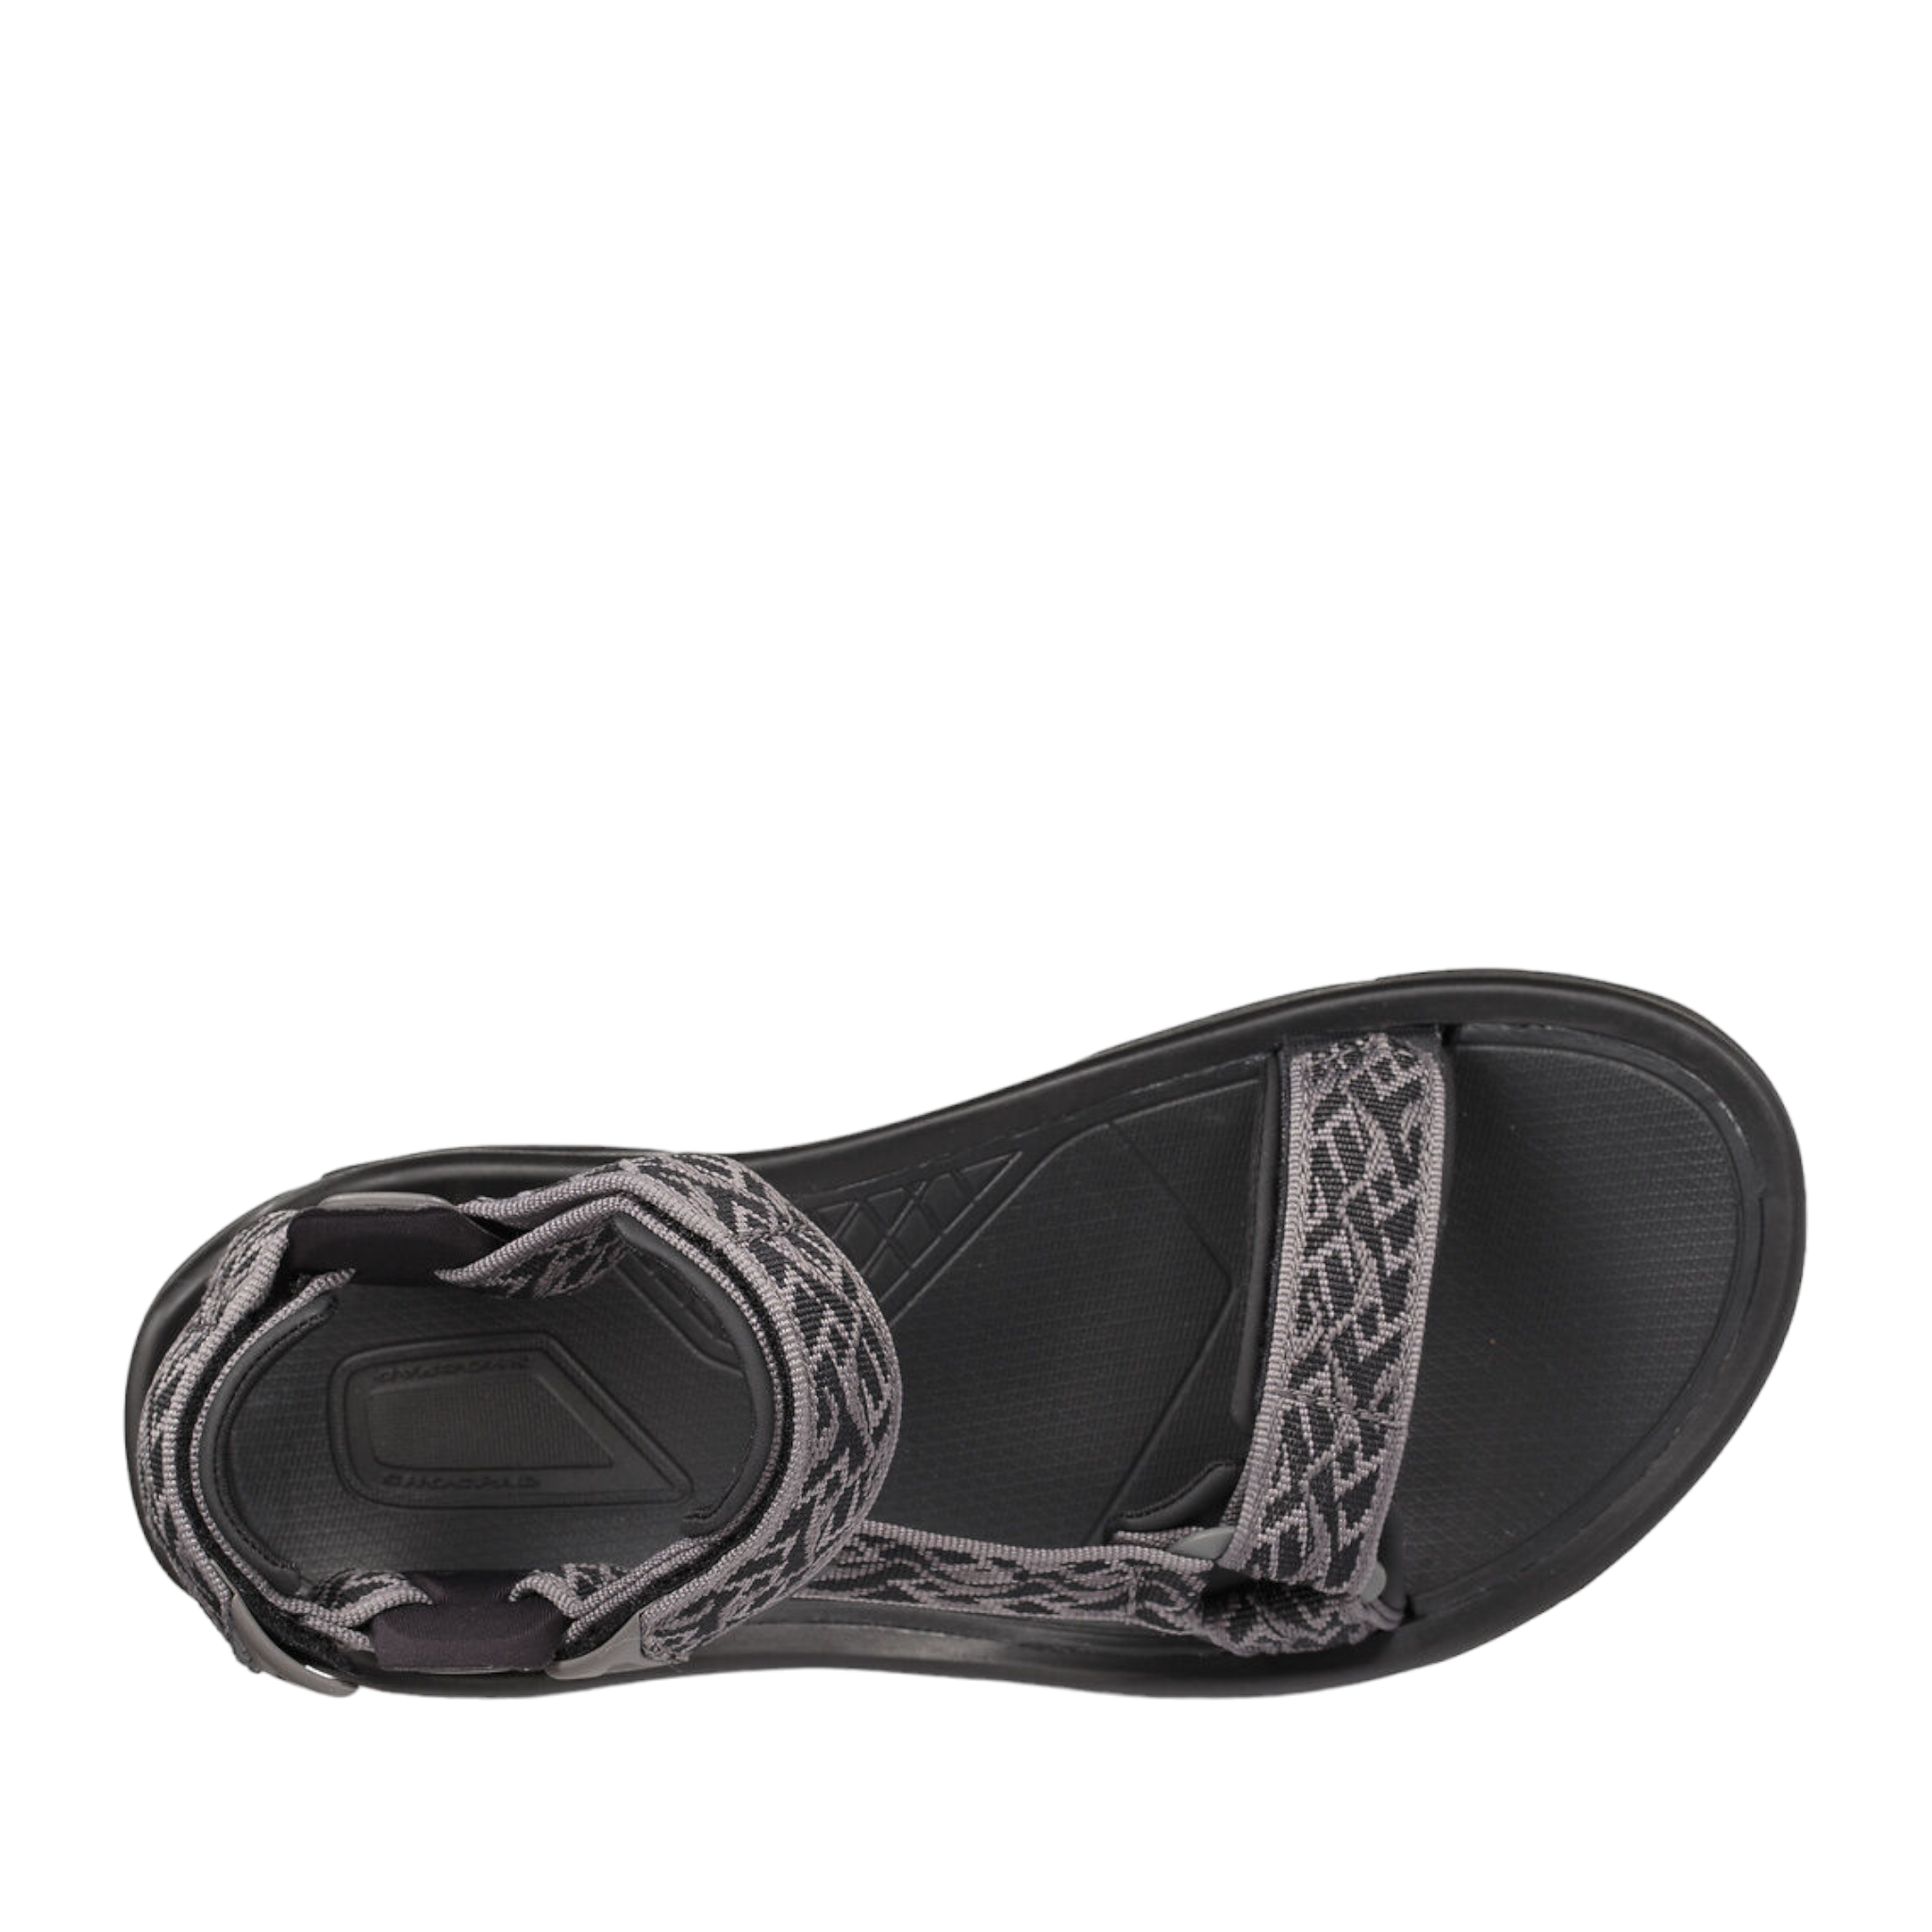 M Terra Fi 5 Universal - shoe&amp;me - Teva - Sandals - Mens, Sandal, Summer